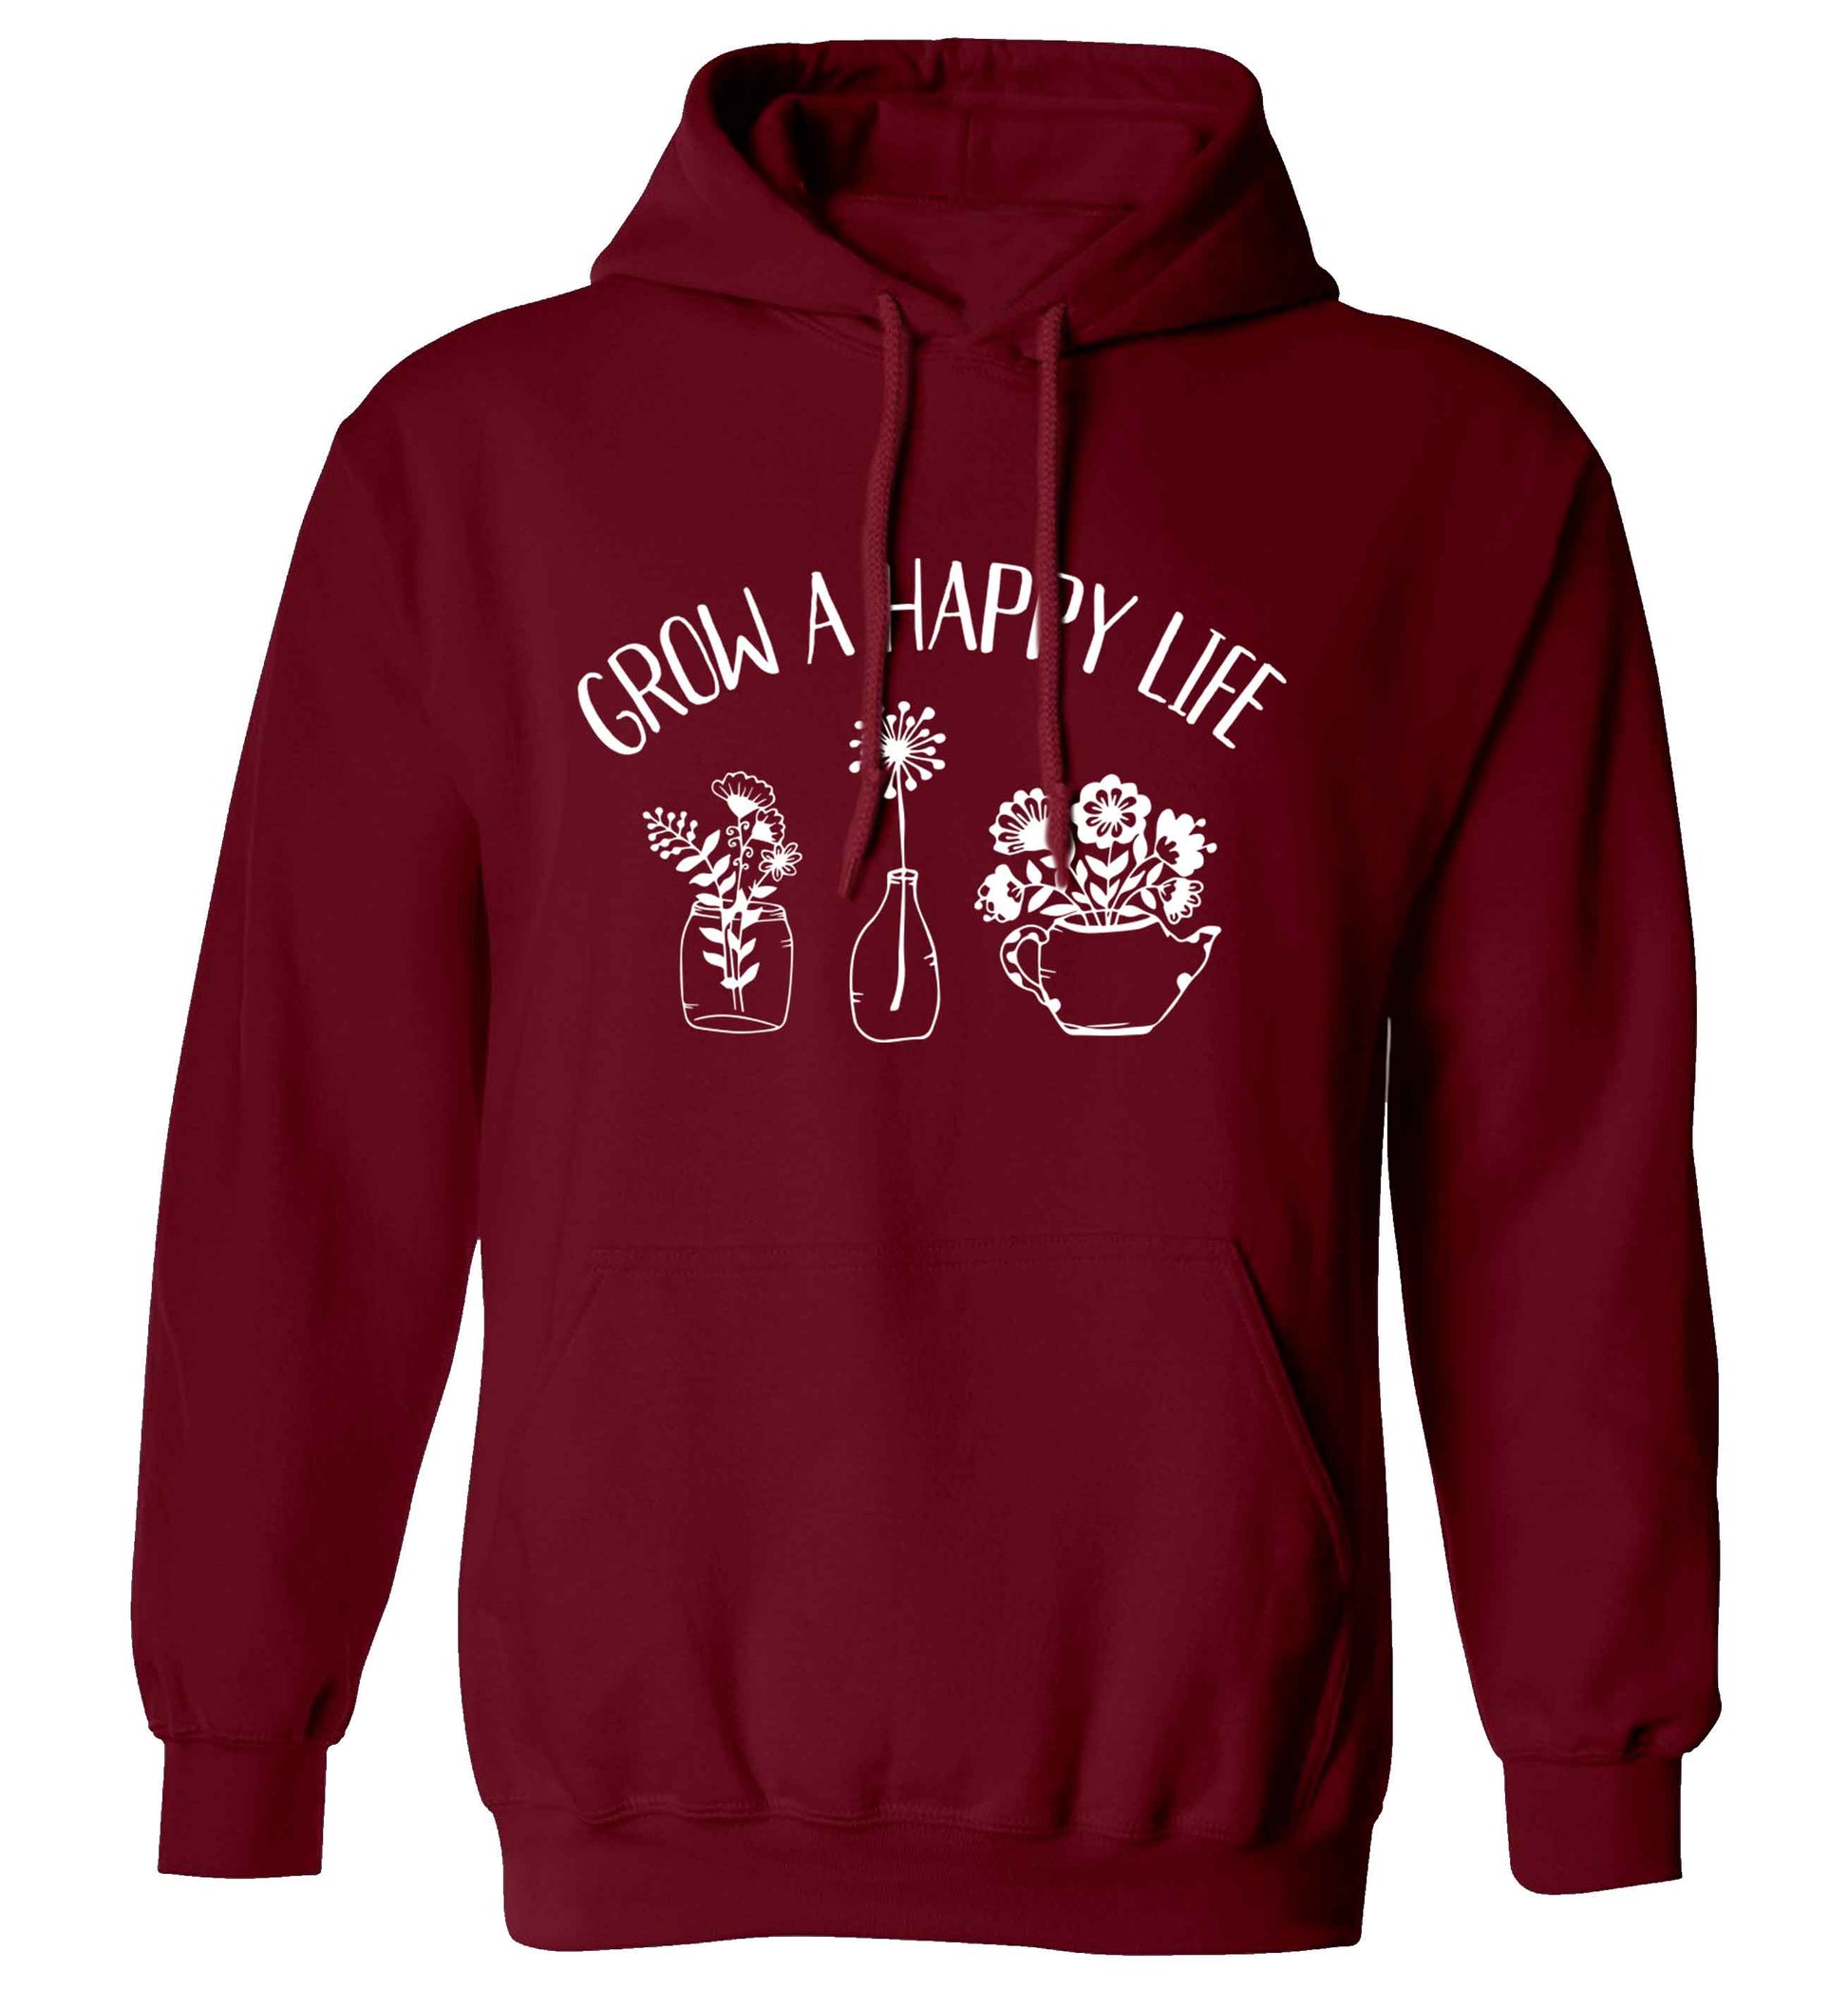 Grow a happy life adults unisex maroon hoodie 2XL